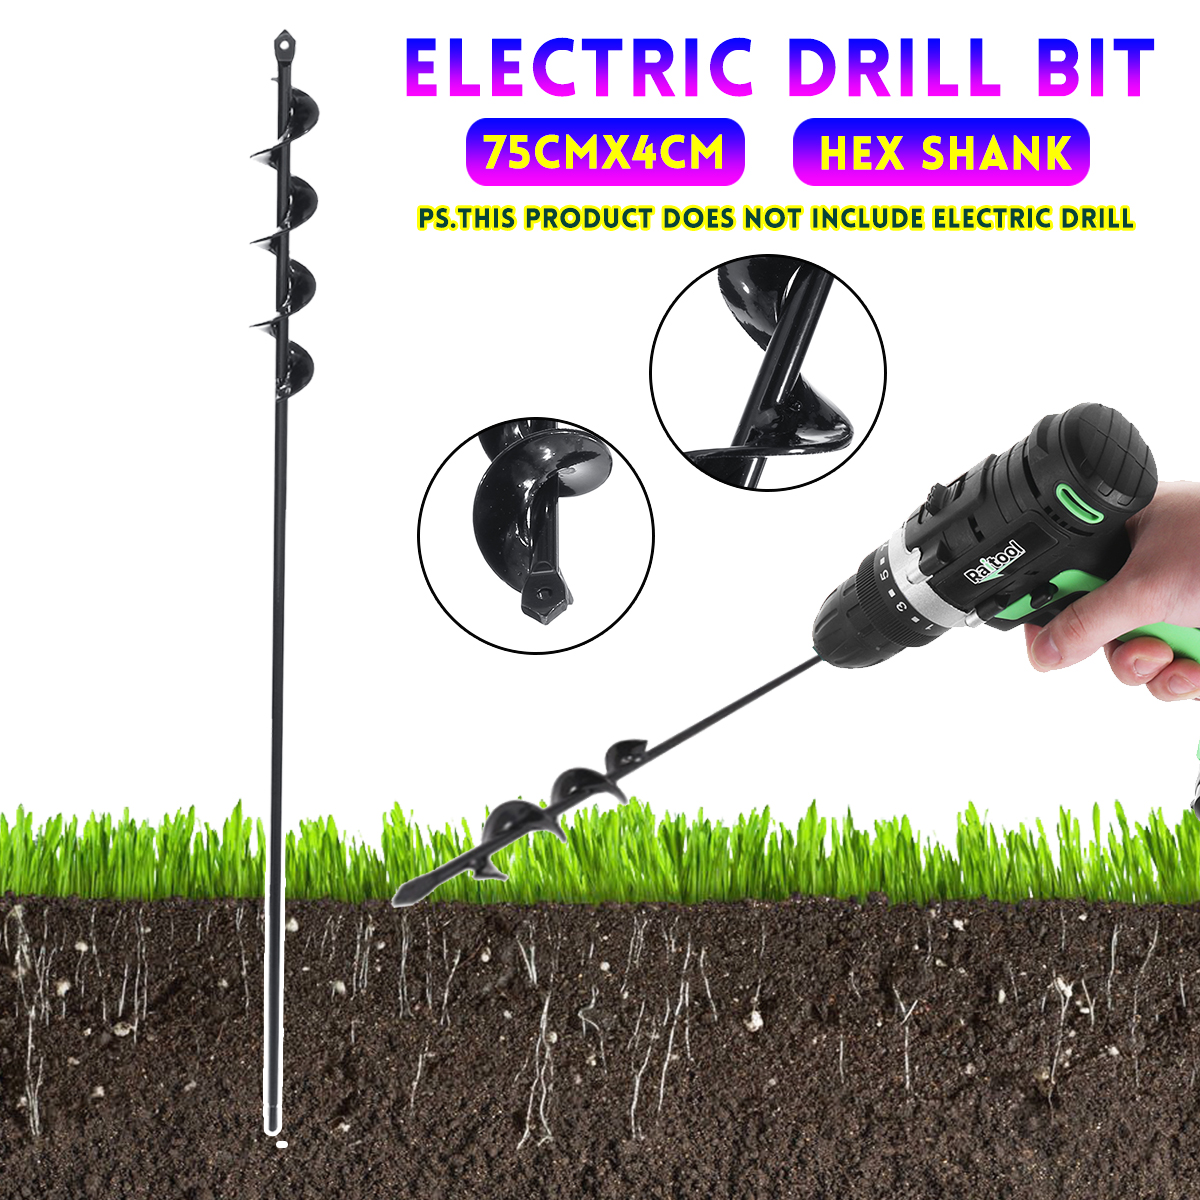 75cmx4cm-Electric-Auger-Drill-Bit-Digs-Hole-Hex-Shank-Black-For-Garden-Loose-Soil-1622336-1